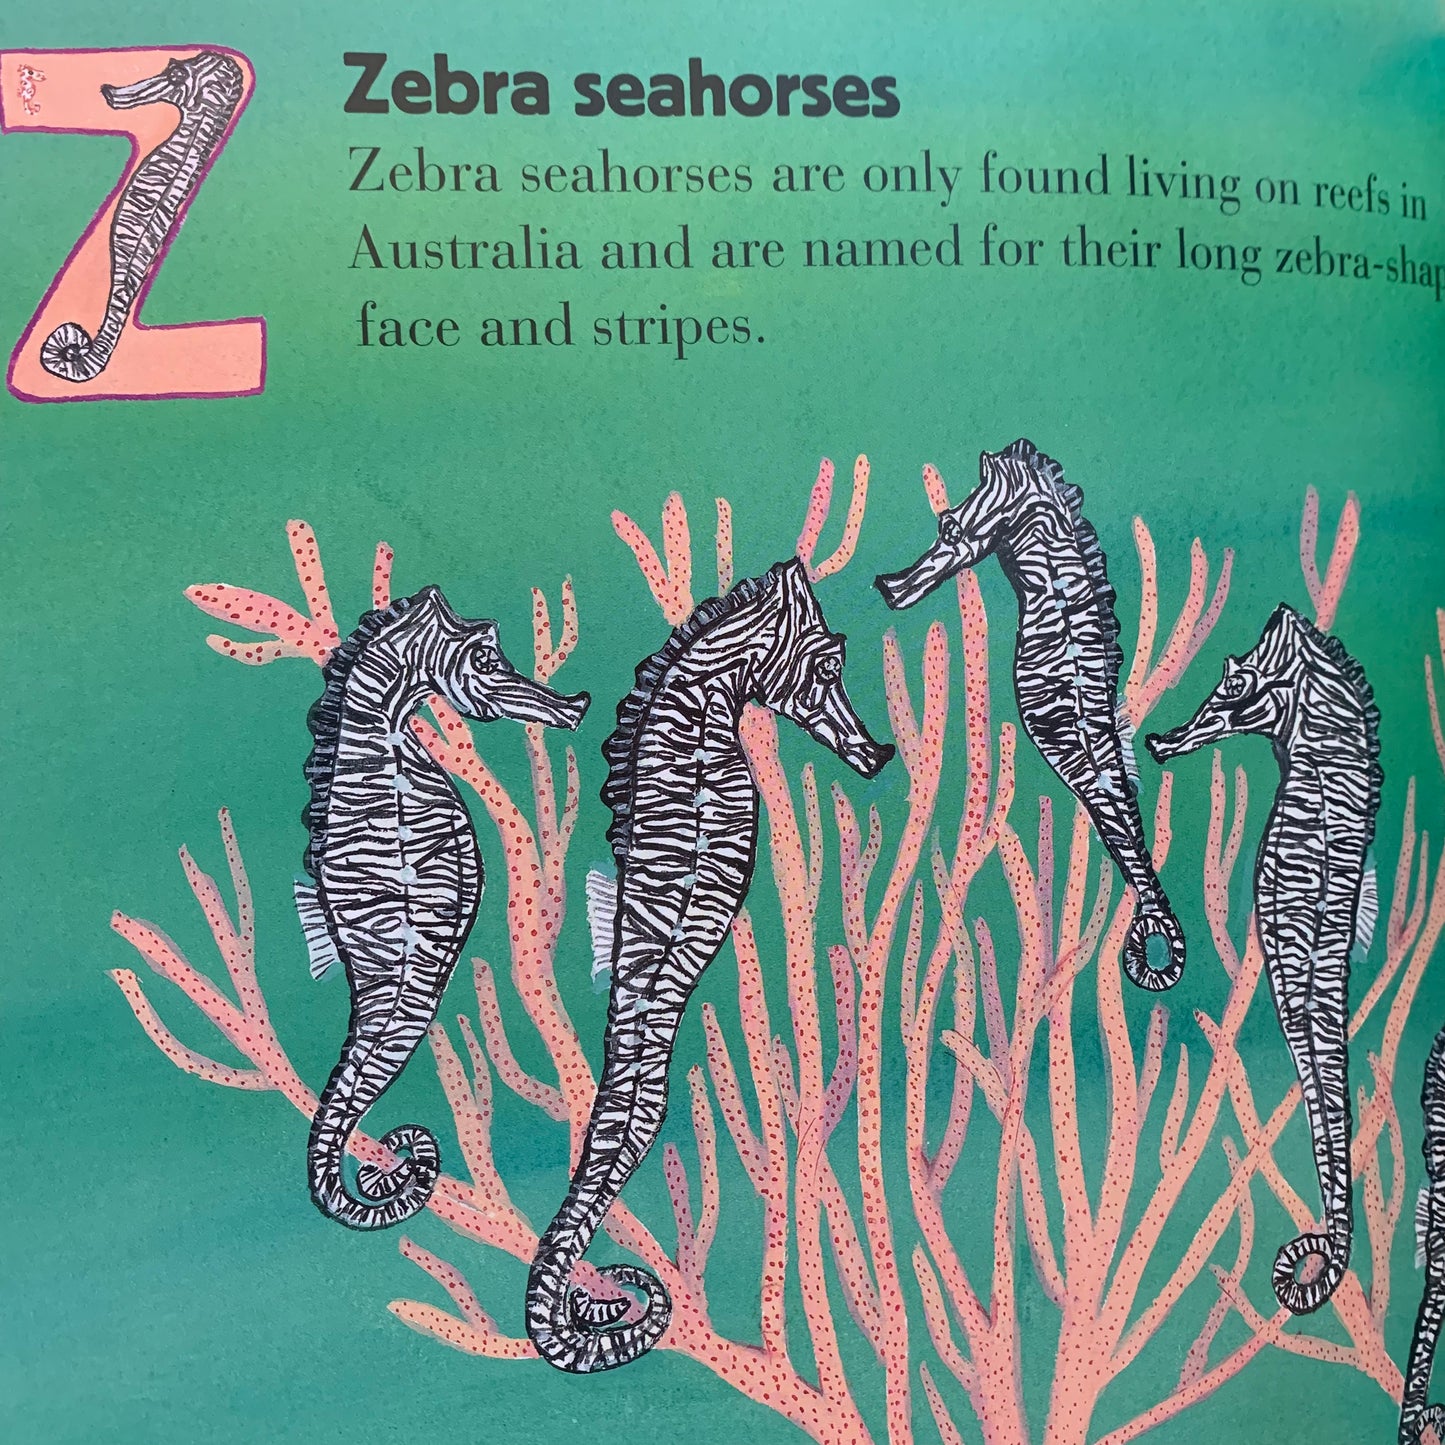 BOOKS & CO - Australia Under the Sea 123 by Frane Lessac- Large Hardcover